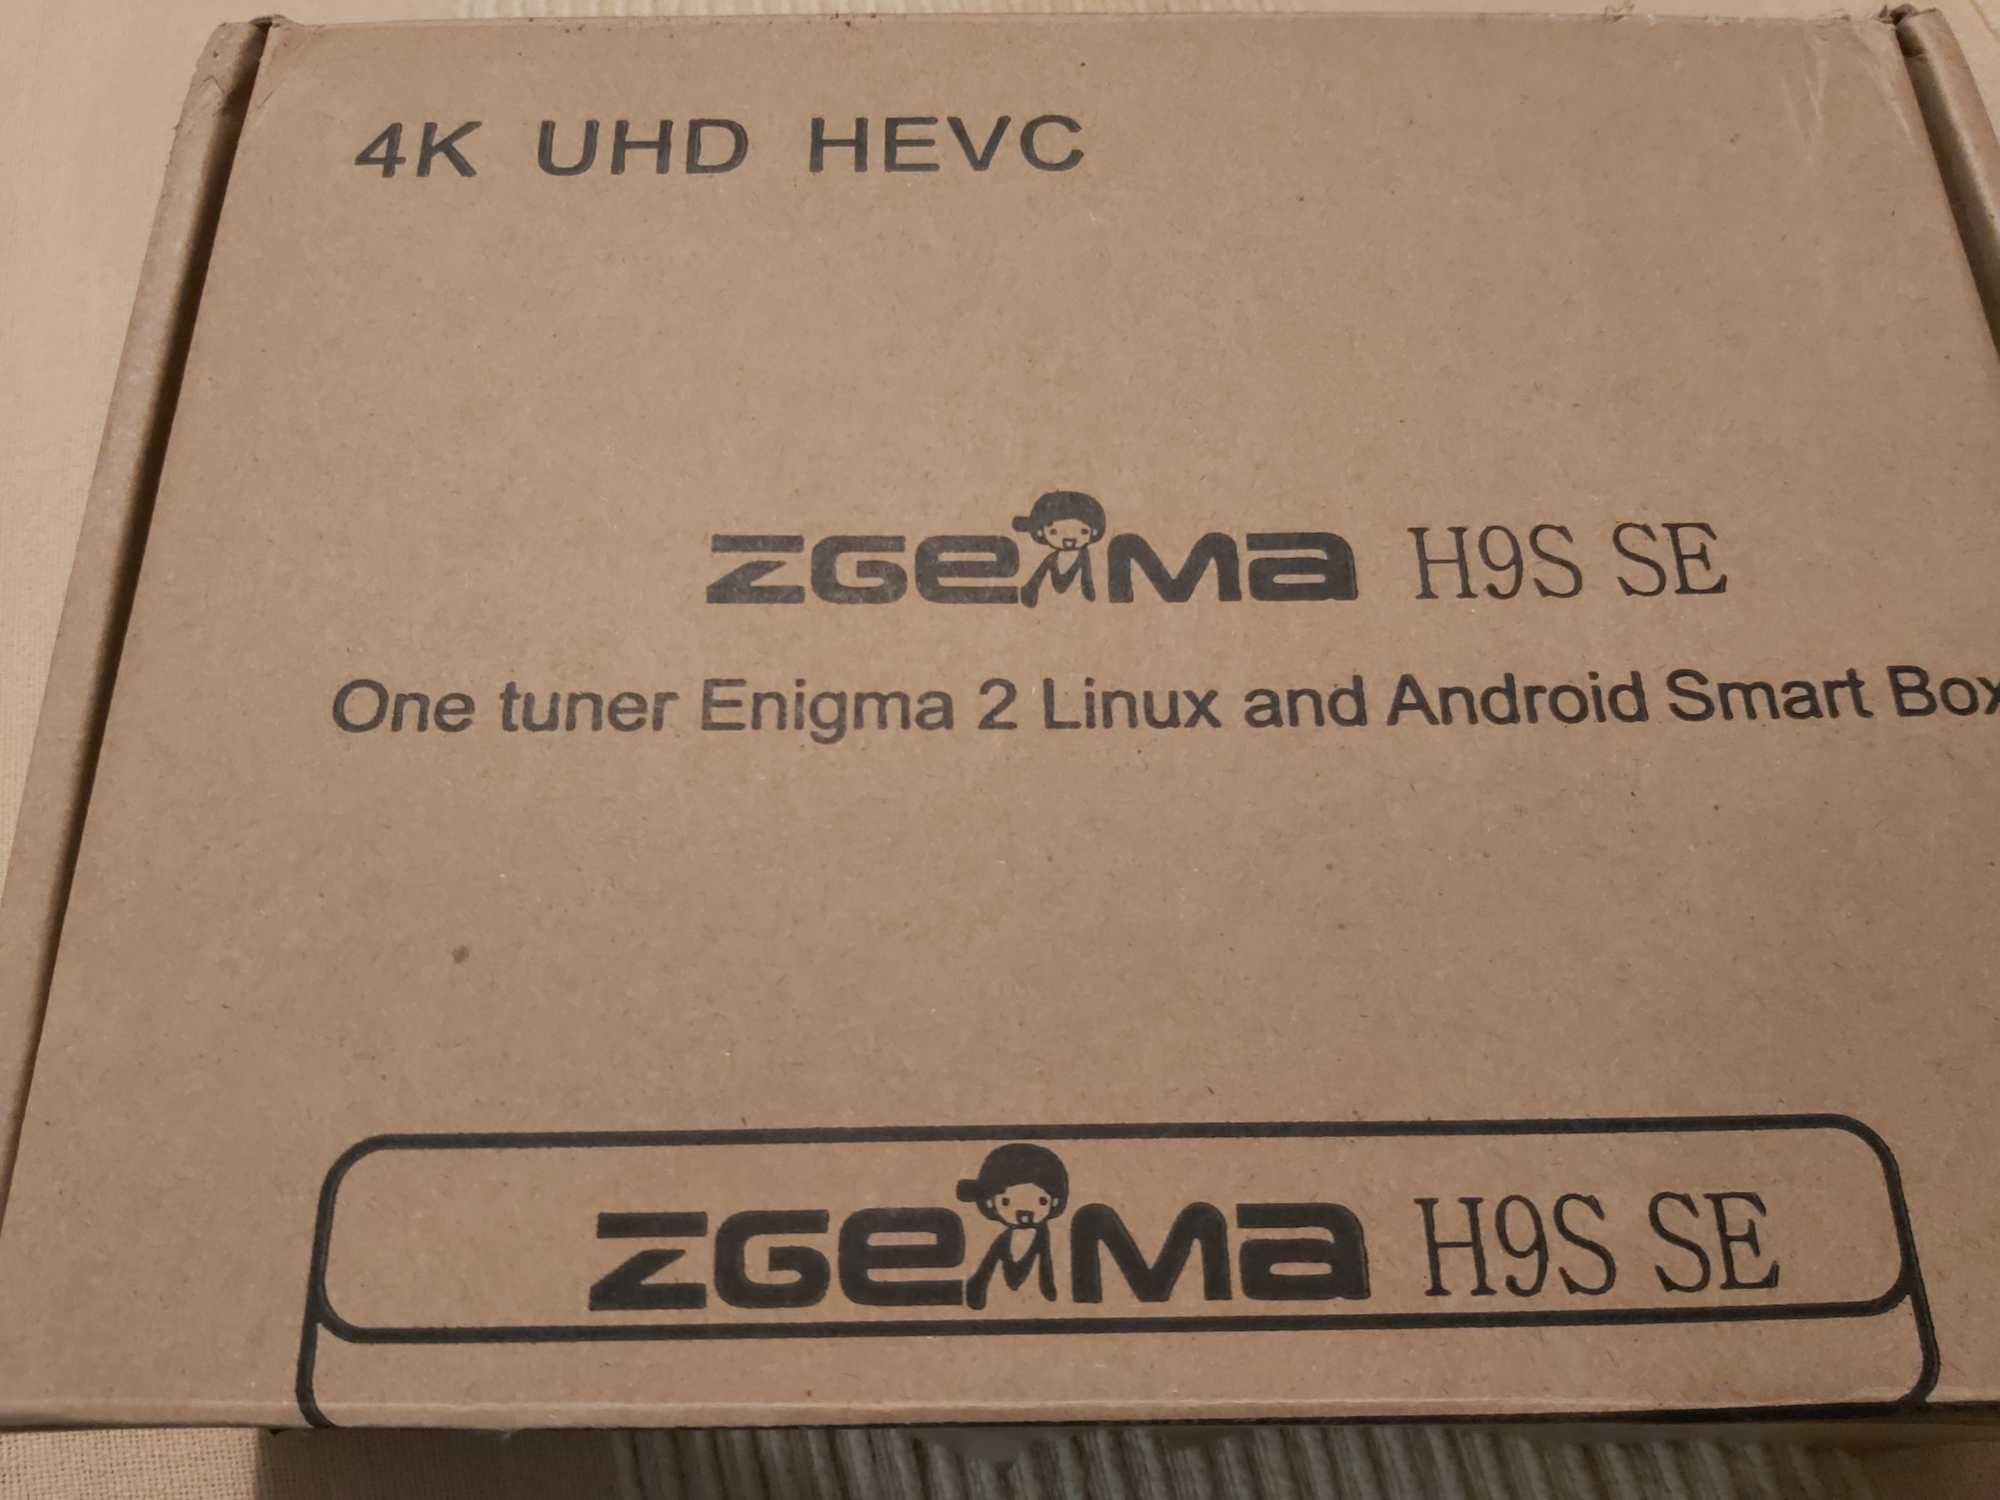 Zgemma H9S SE - Enigma2 + Android - 4K Satélite